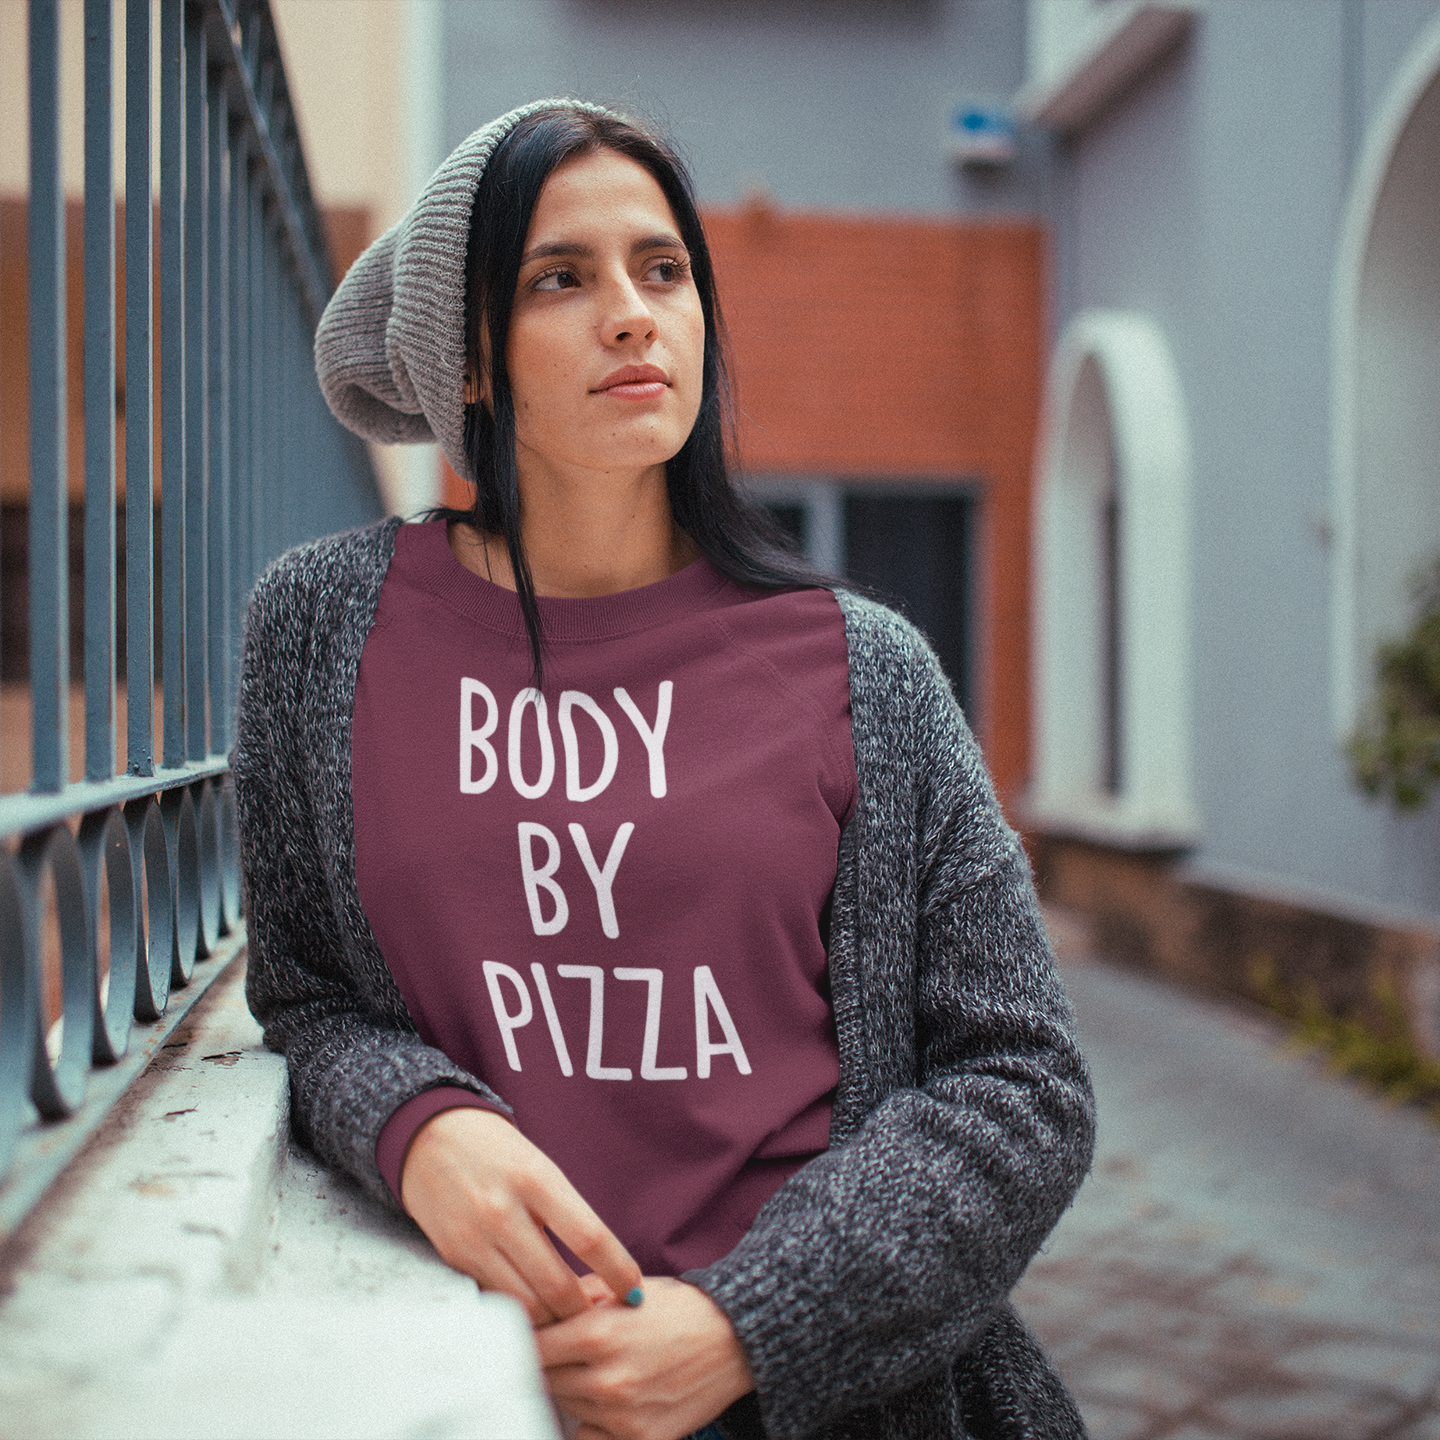 'Body by pizza' trui